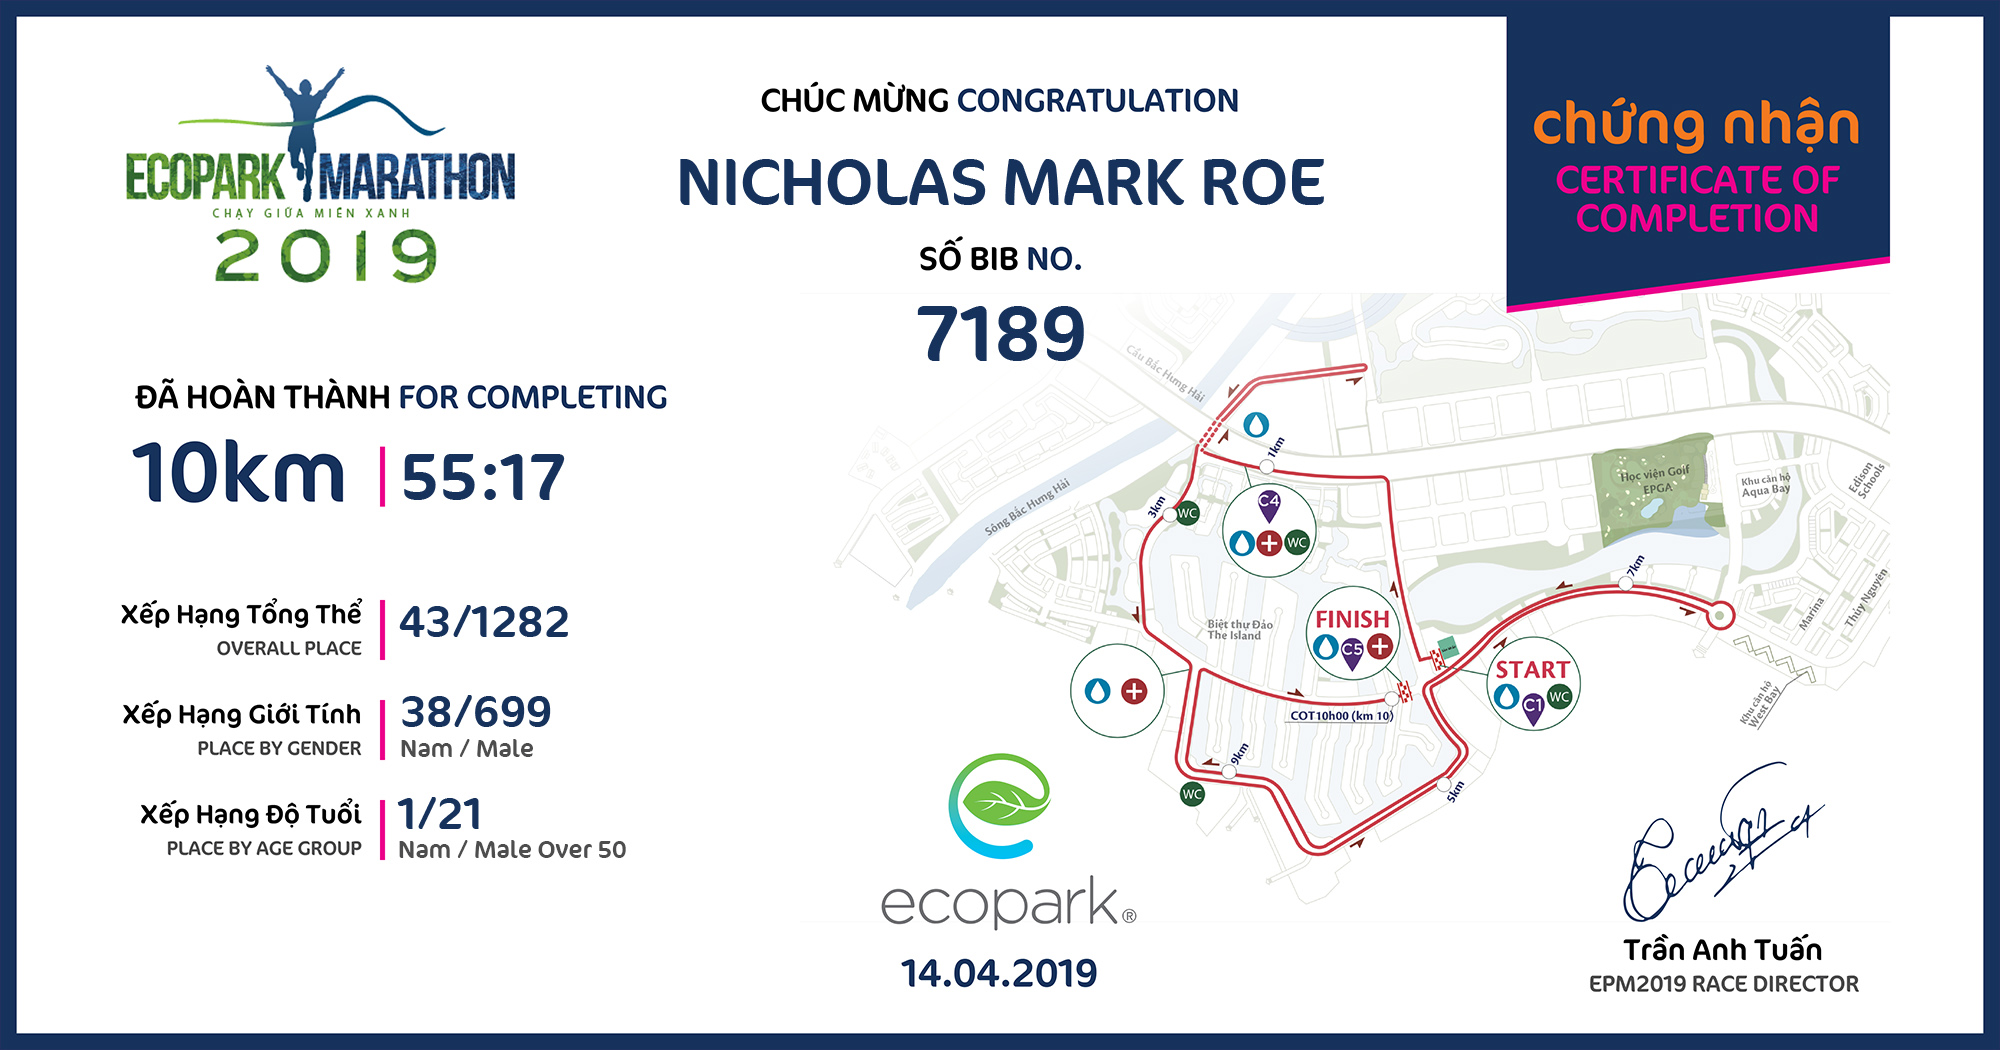 7189 - Nicholas Mark Roe